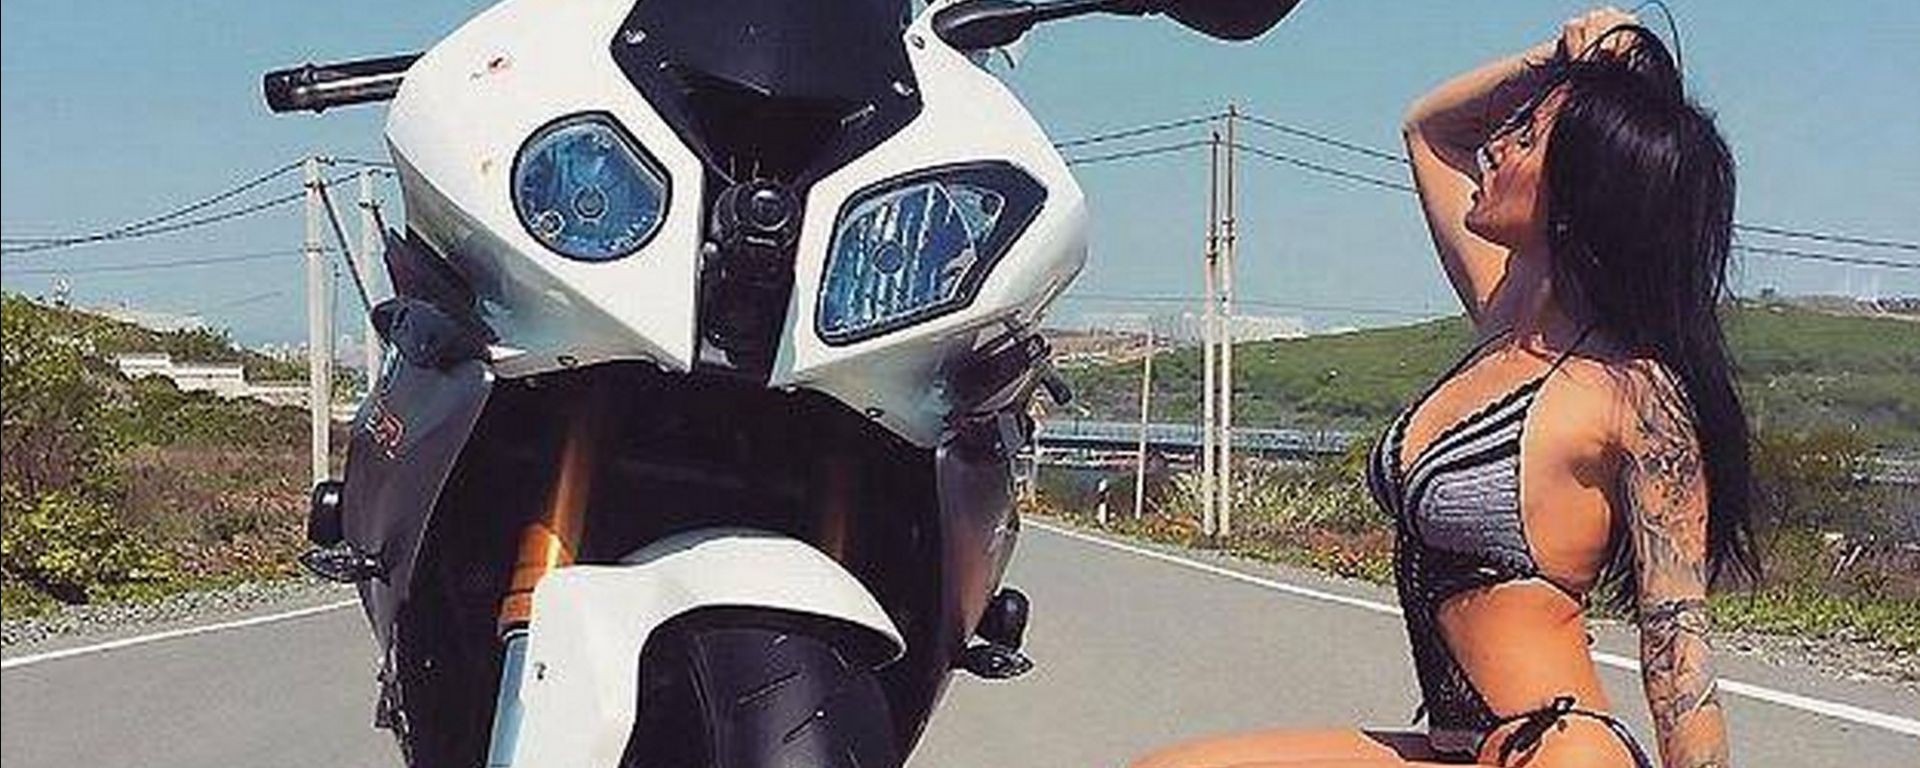 Incidente Muore La Motociclista Russa Olga Pronina Star Di Instagram